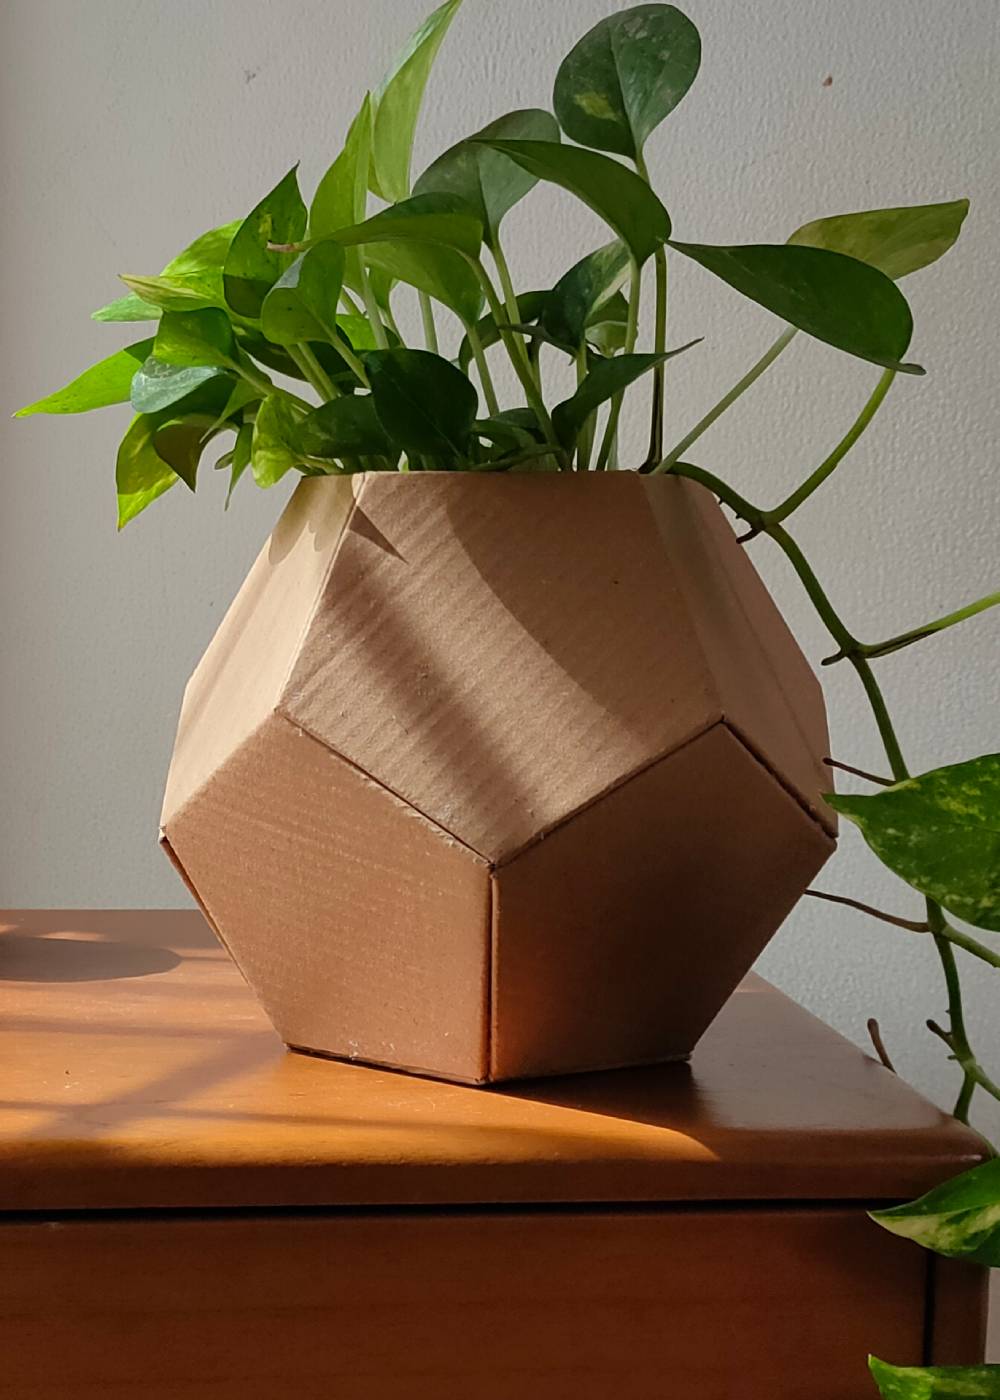 Vas indoor berbentuk dedocahedron dari kardus